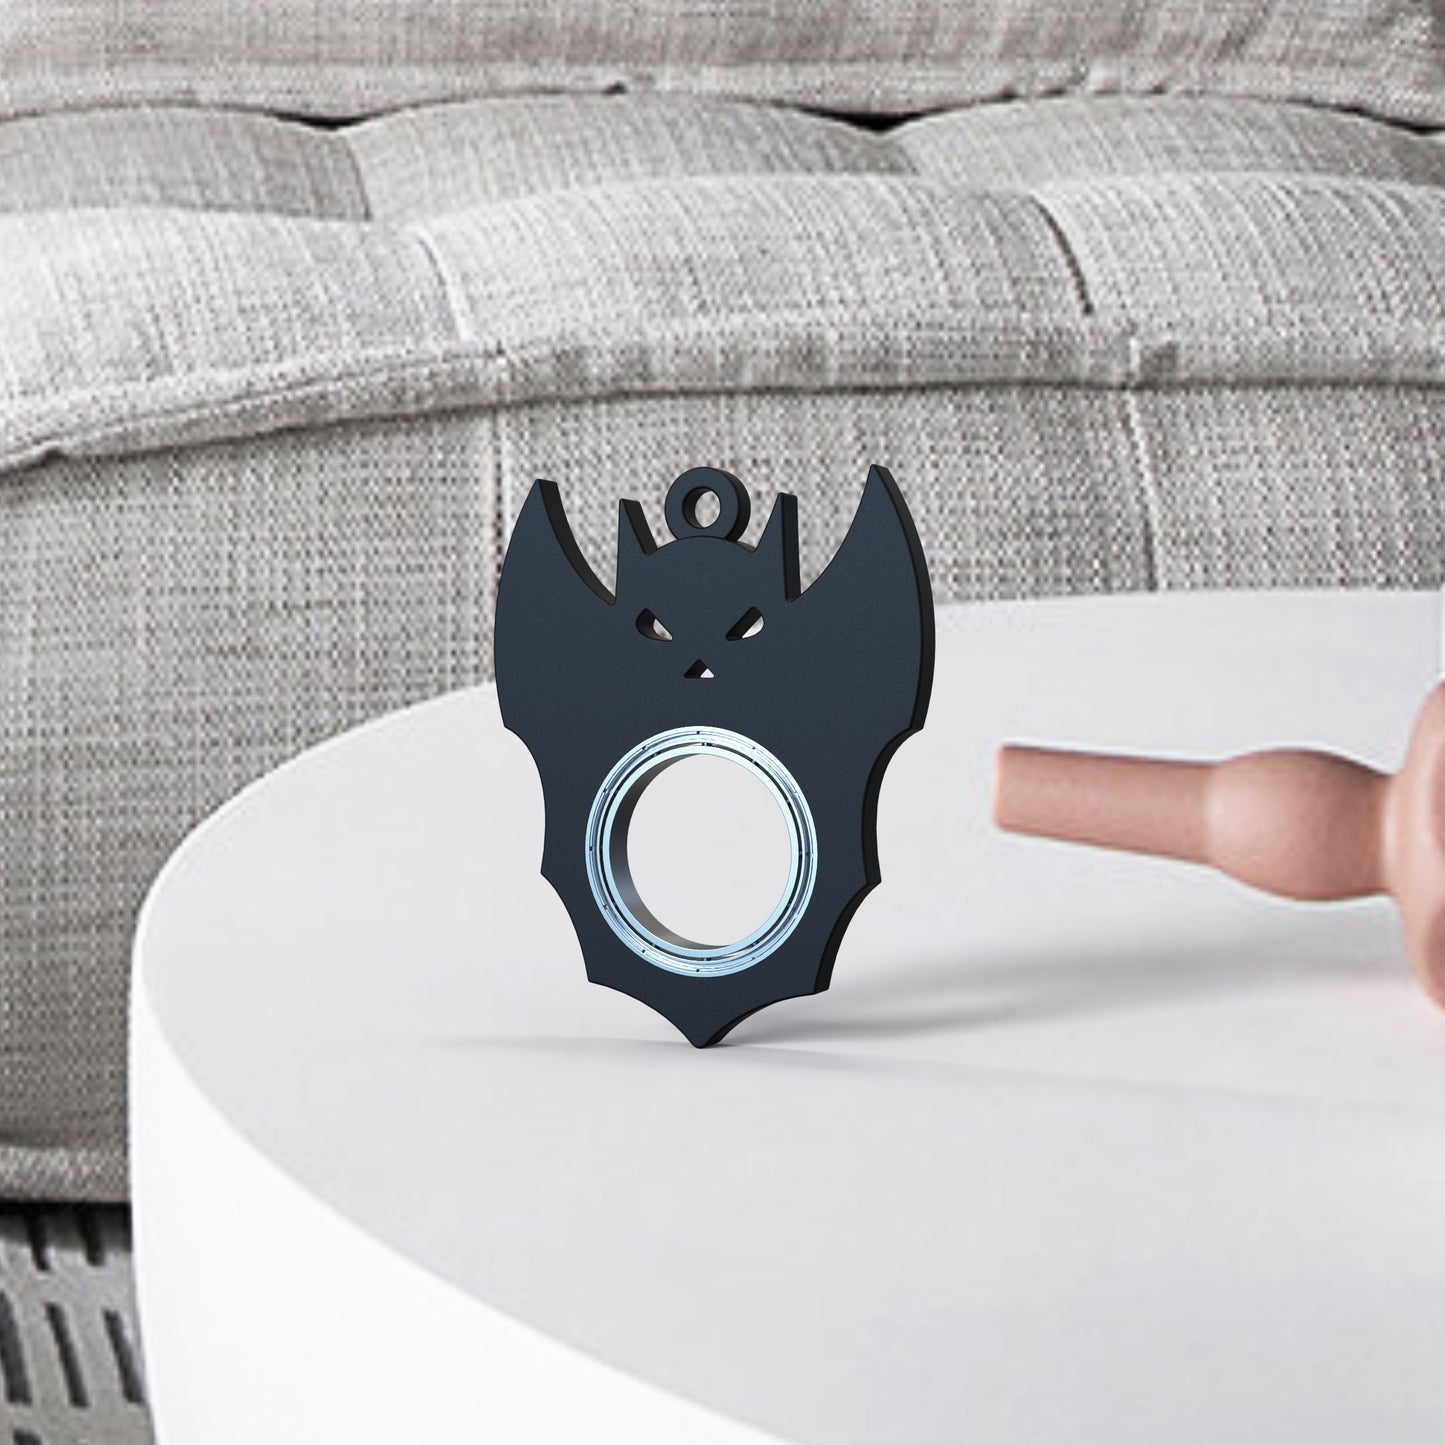 Halloween Creative Fidget Spinner Toy Bat Demon Ghost Keychain Hand Spinner Anti-Anxiety Toy Relieves Stress Bottle Opener Kids Toy